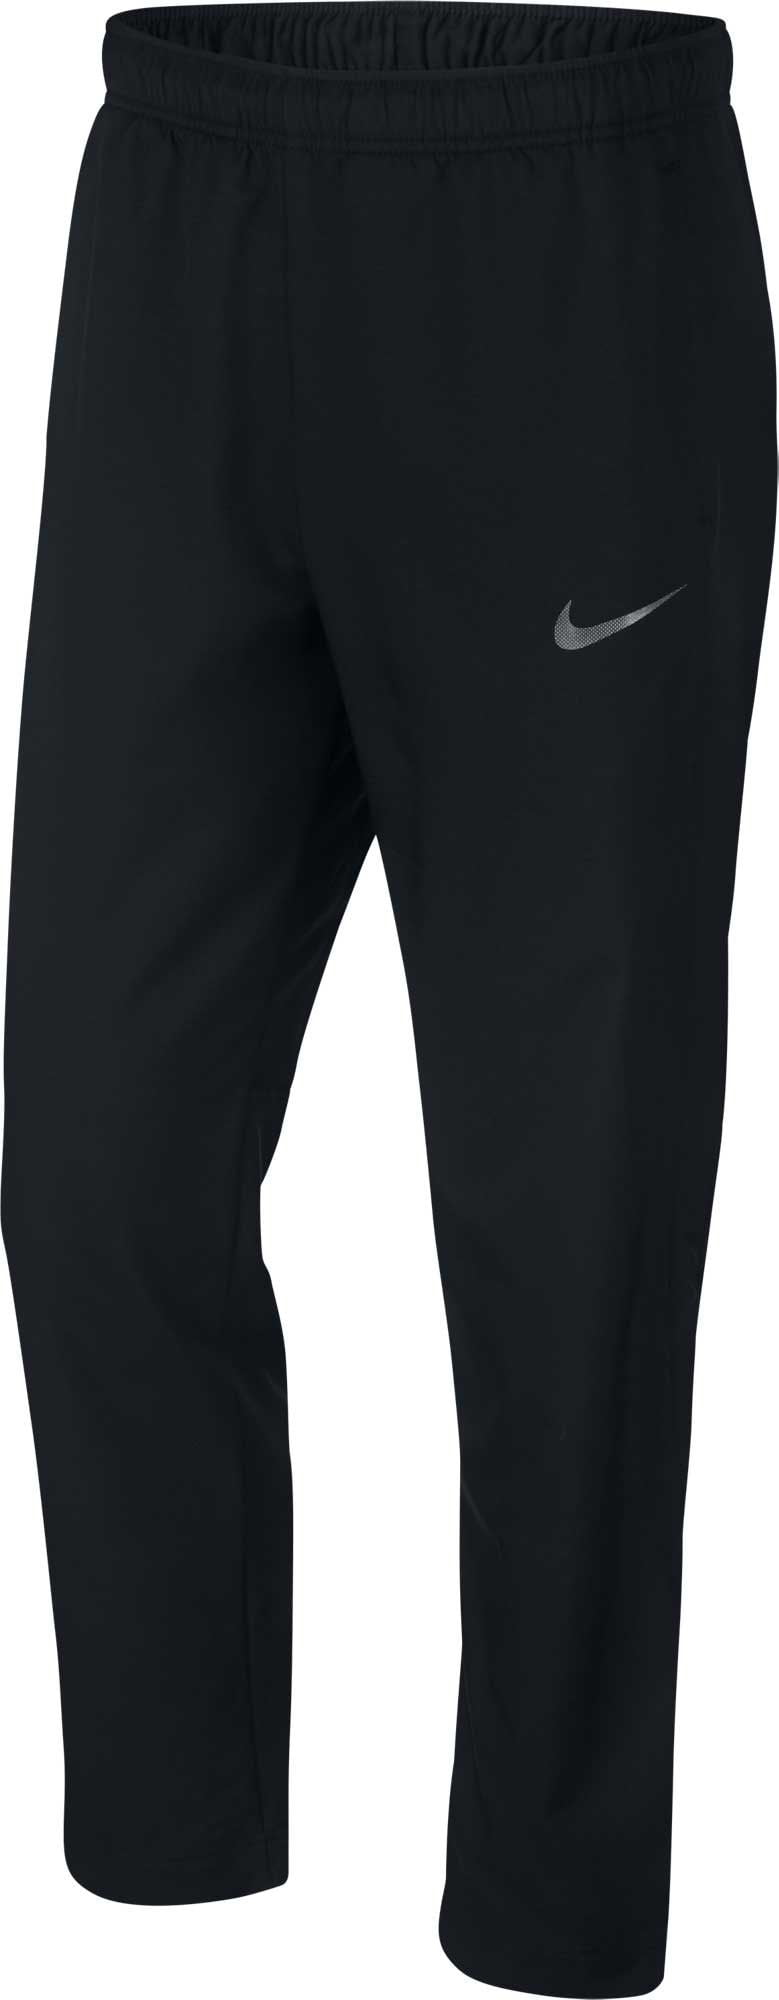 Nike Men's Dry Woven Team Training Pants - Walmart.com - Walmart.com